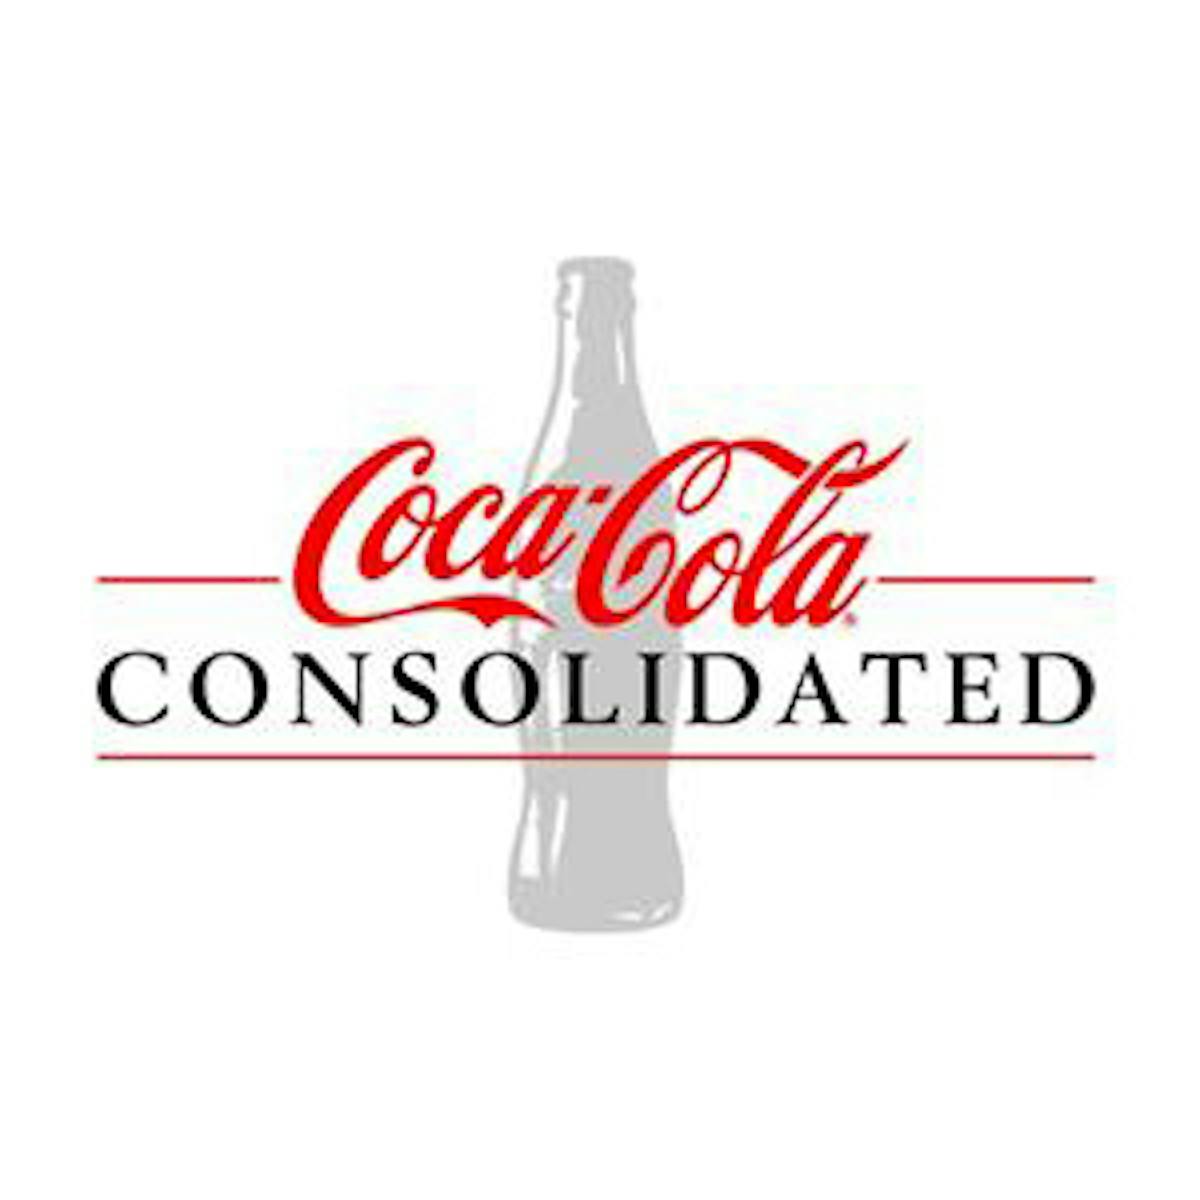 Coca Cola Consolidated Logo